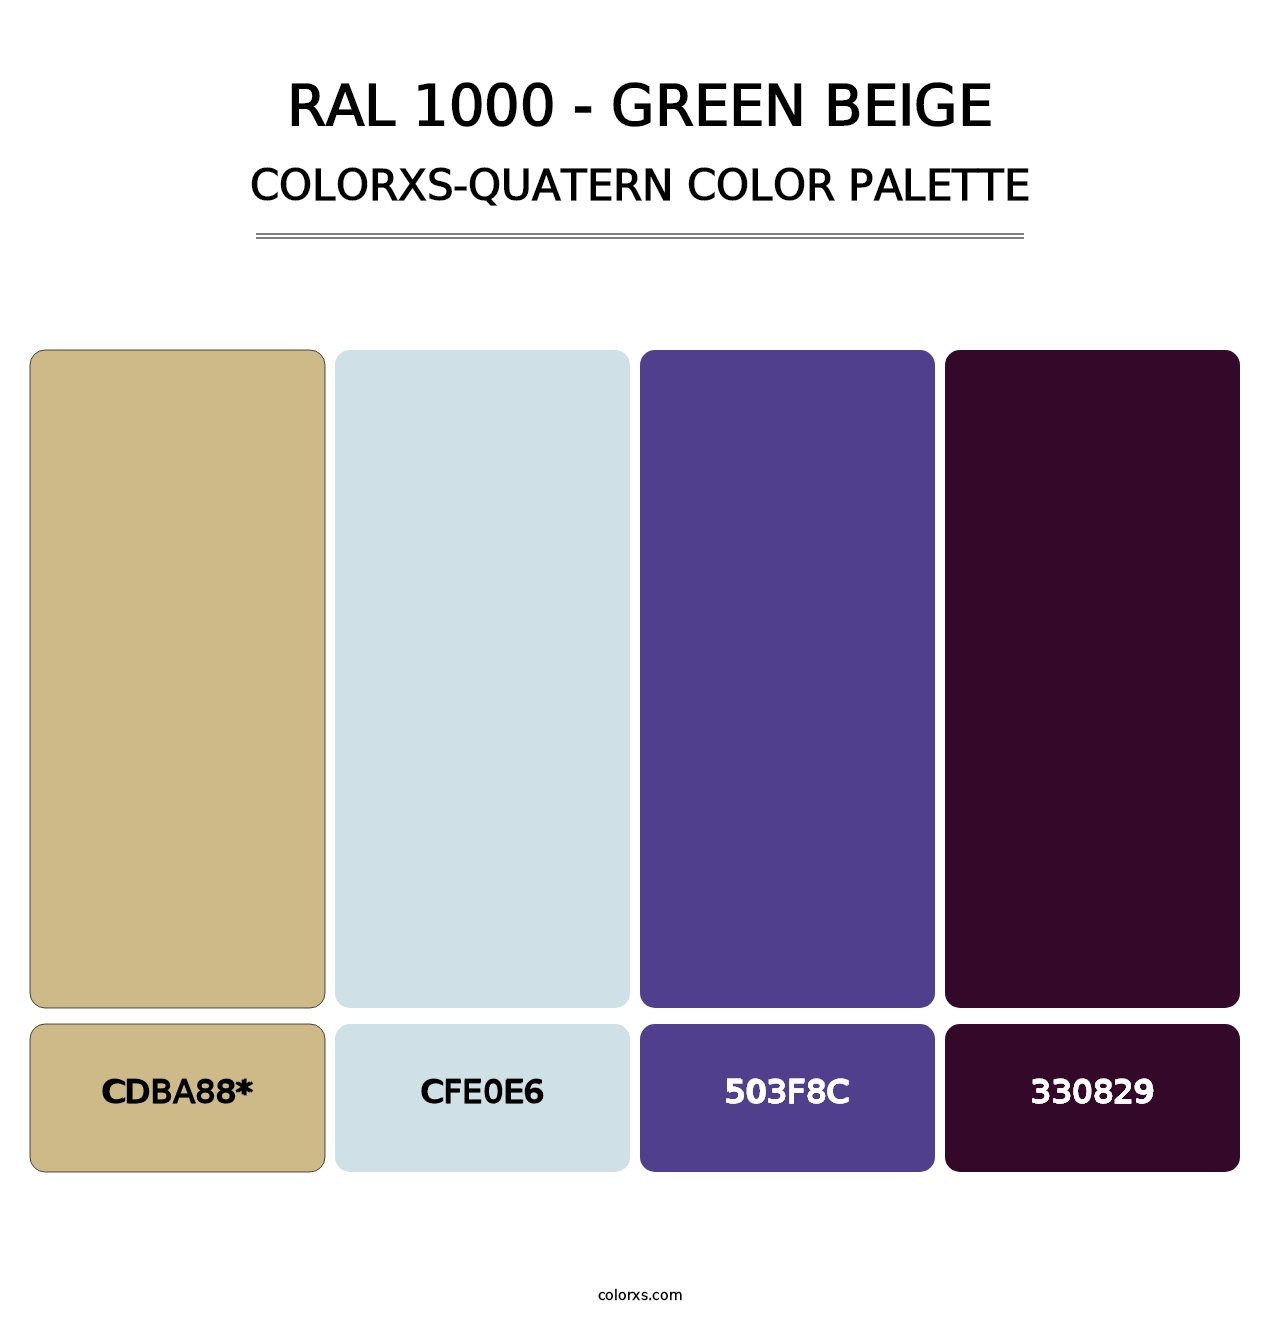 RAL 1000 - Green Beige - Colorxs Quatern Palette